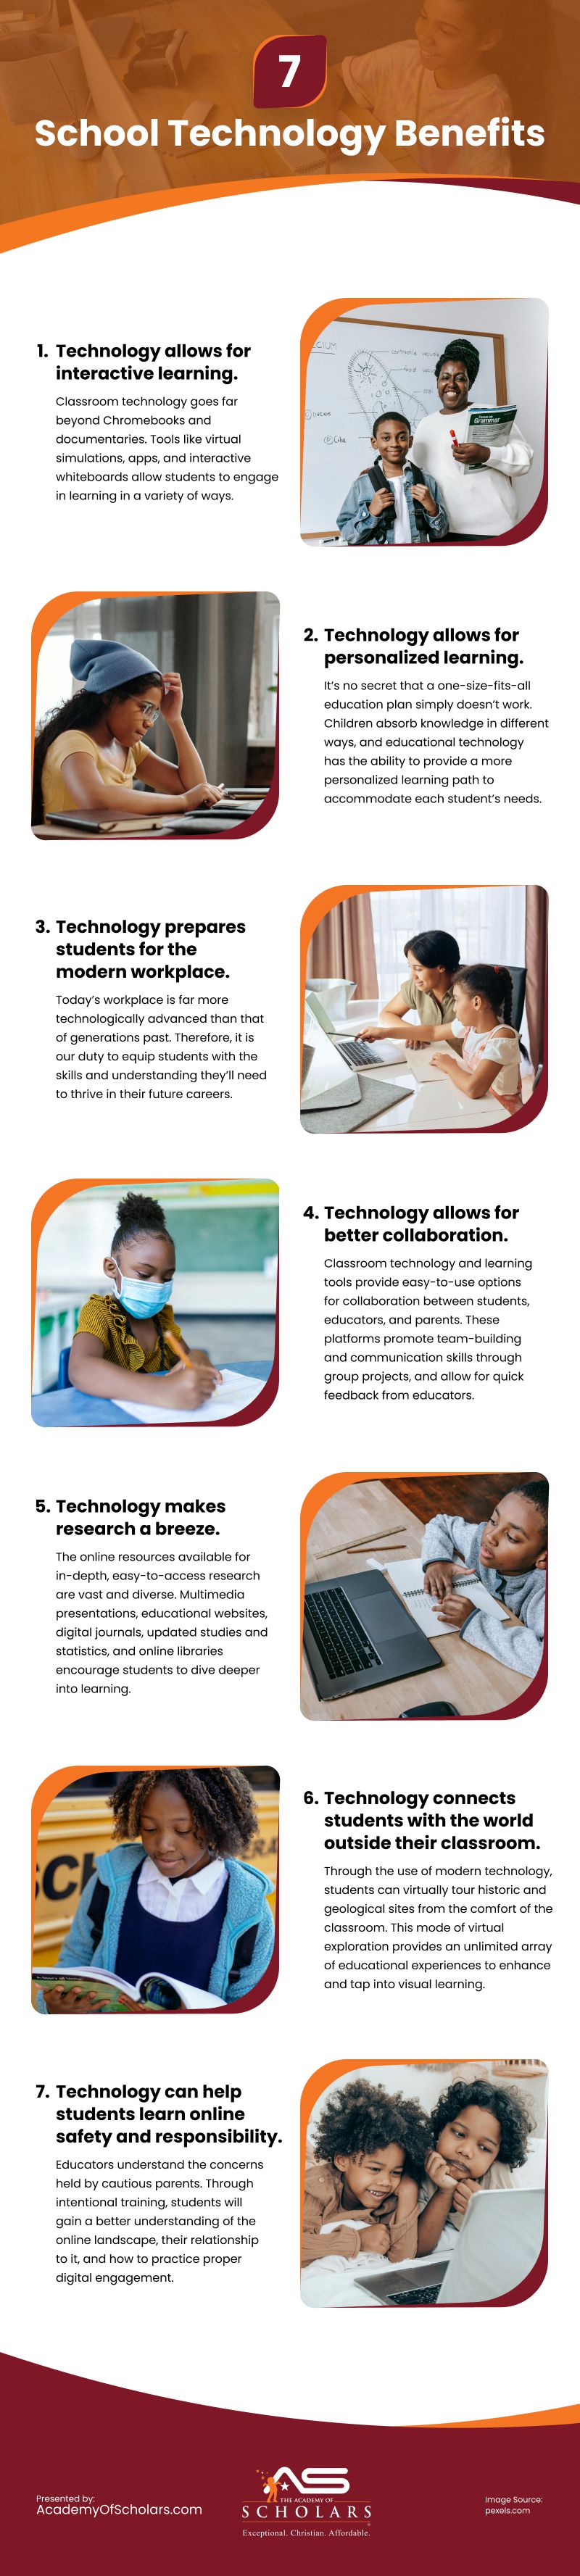 7 School Technology Benefits Infographic